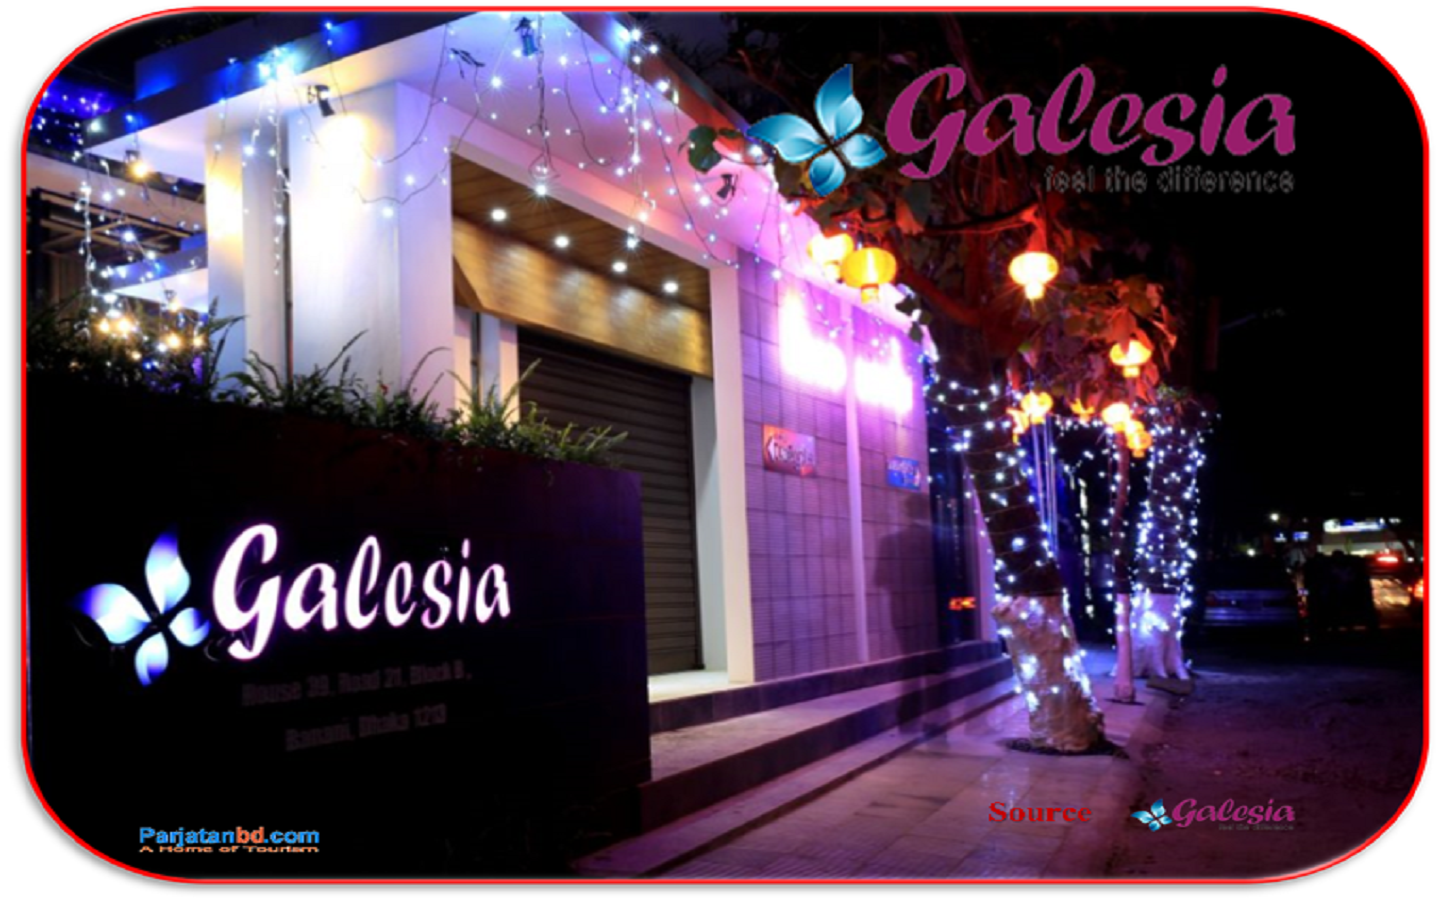 Galesia Hotel & Resort ltd., Banani Picture-2